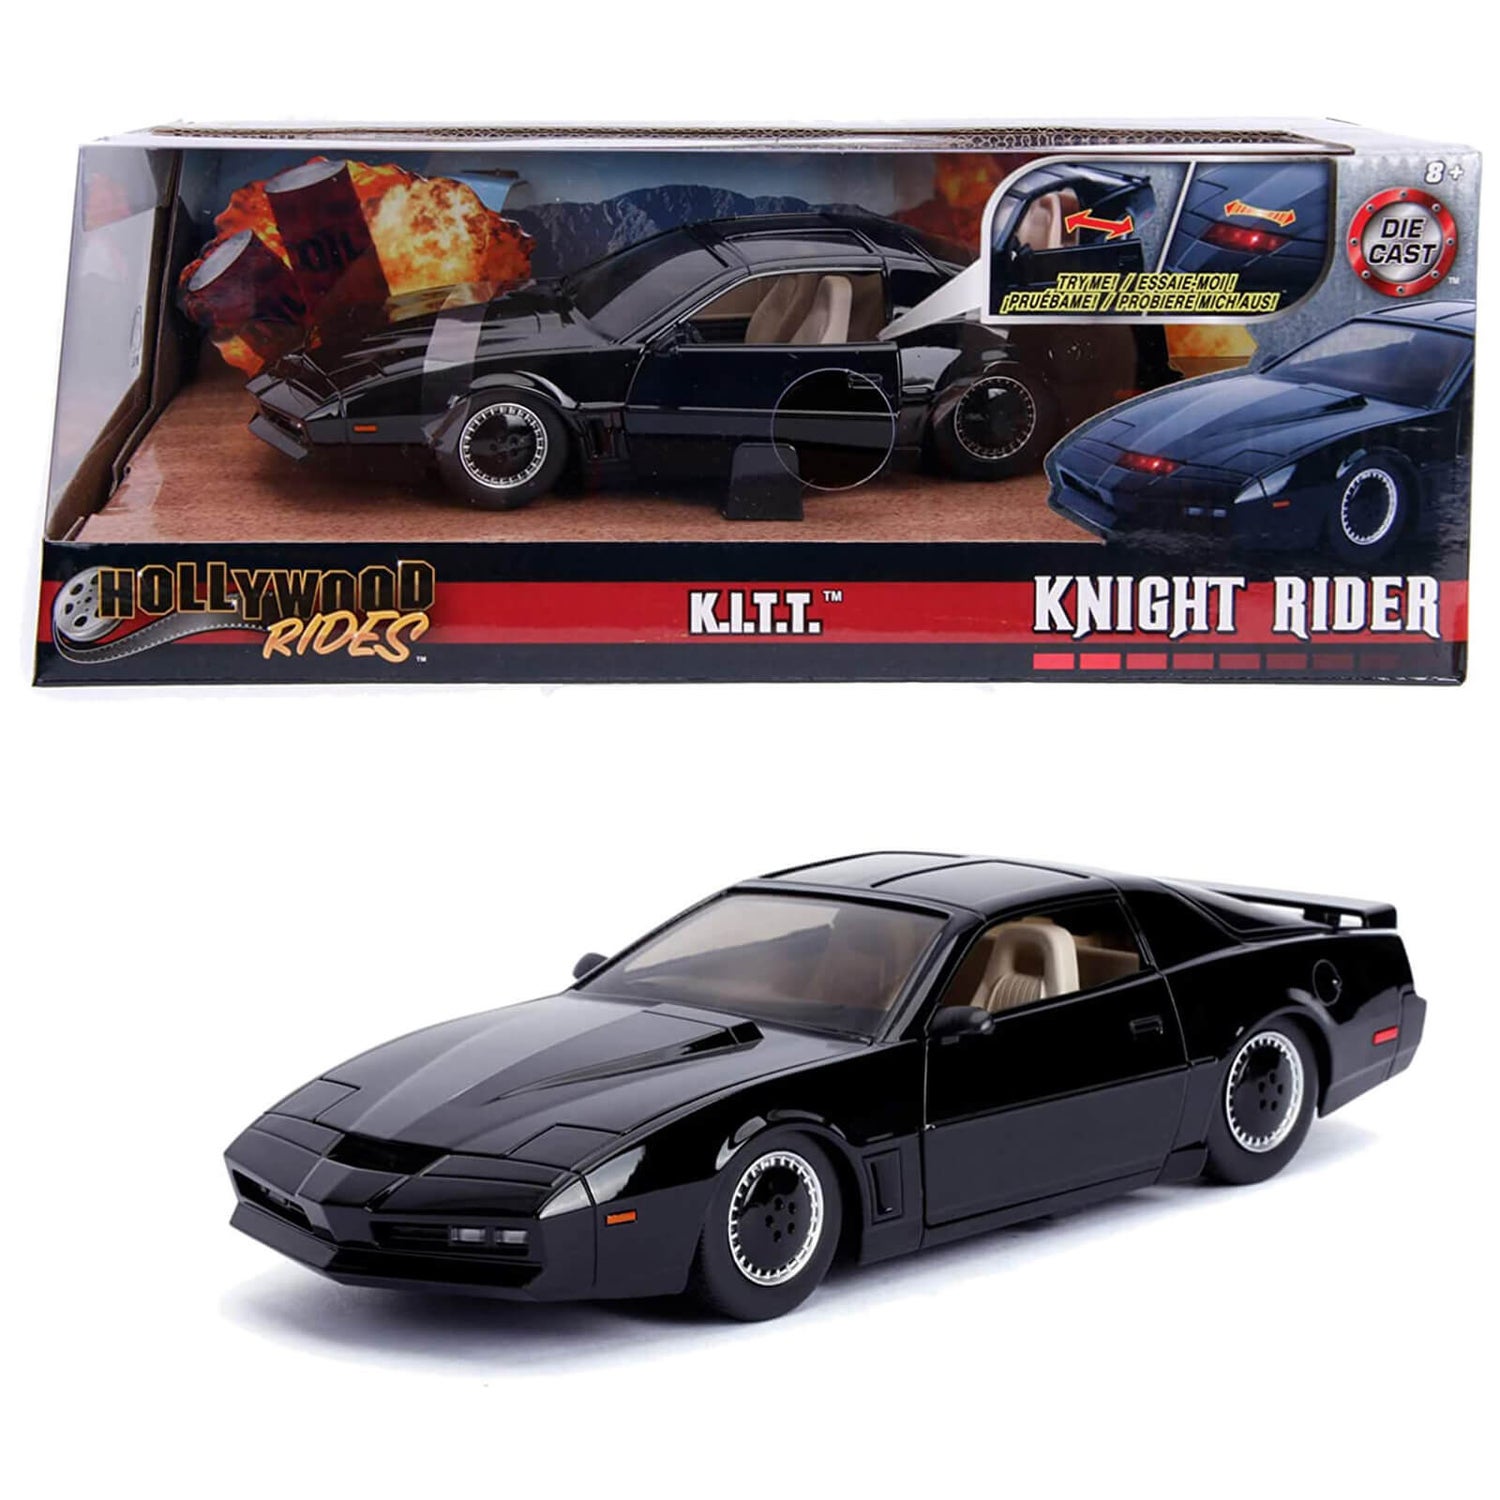 Jada Toys Knight Rider 1982 Pontiac Trans Am 1:24 Scale Die-Cast Metal Vehicle - K.I.T.T.